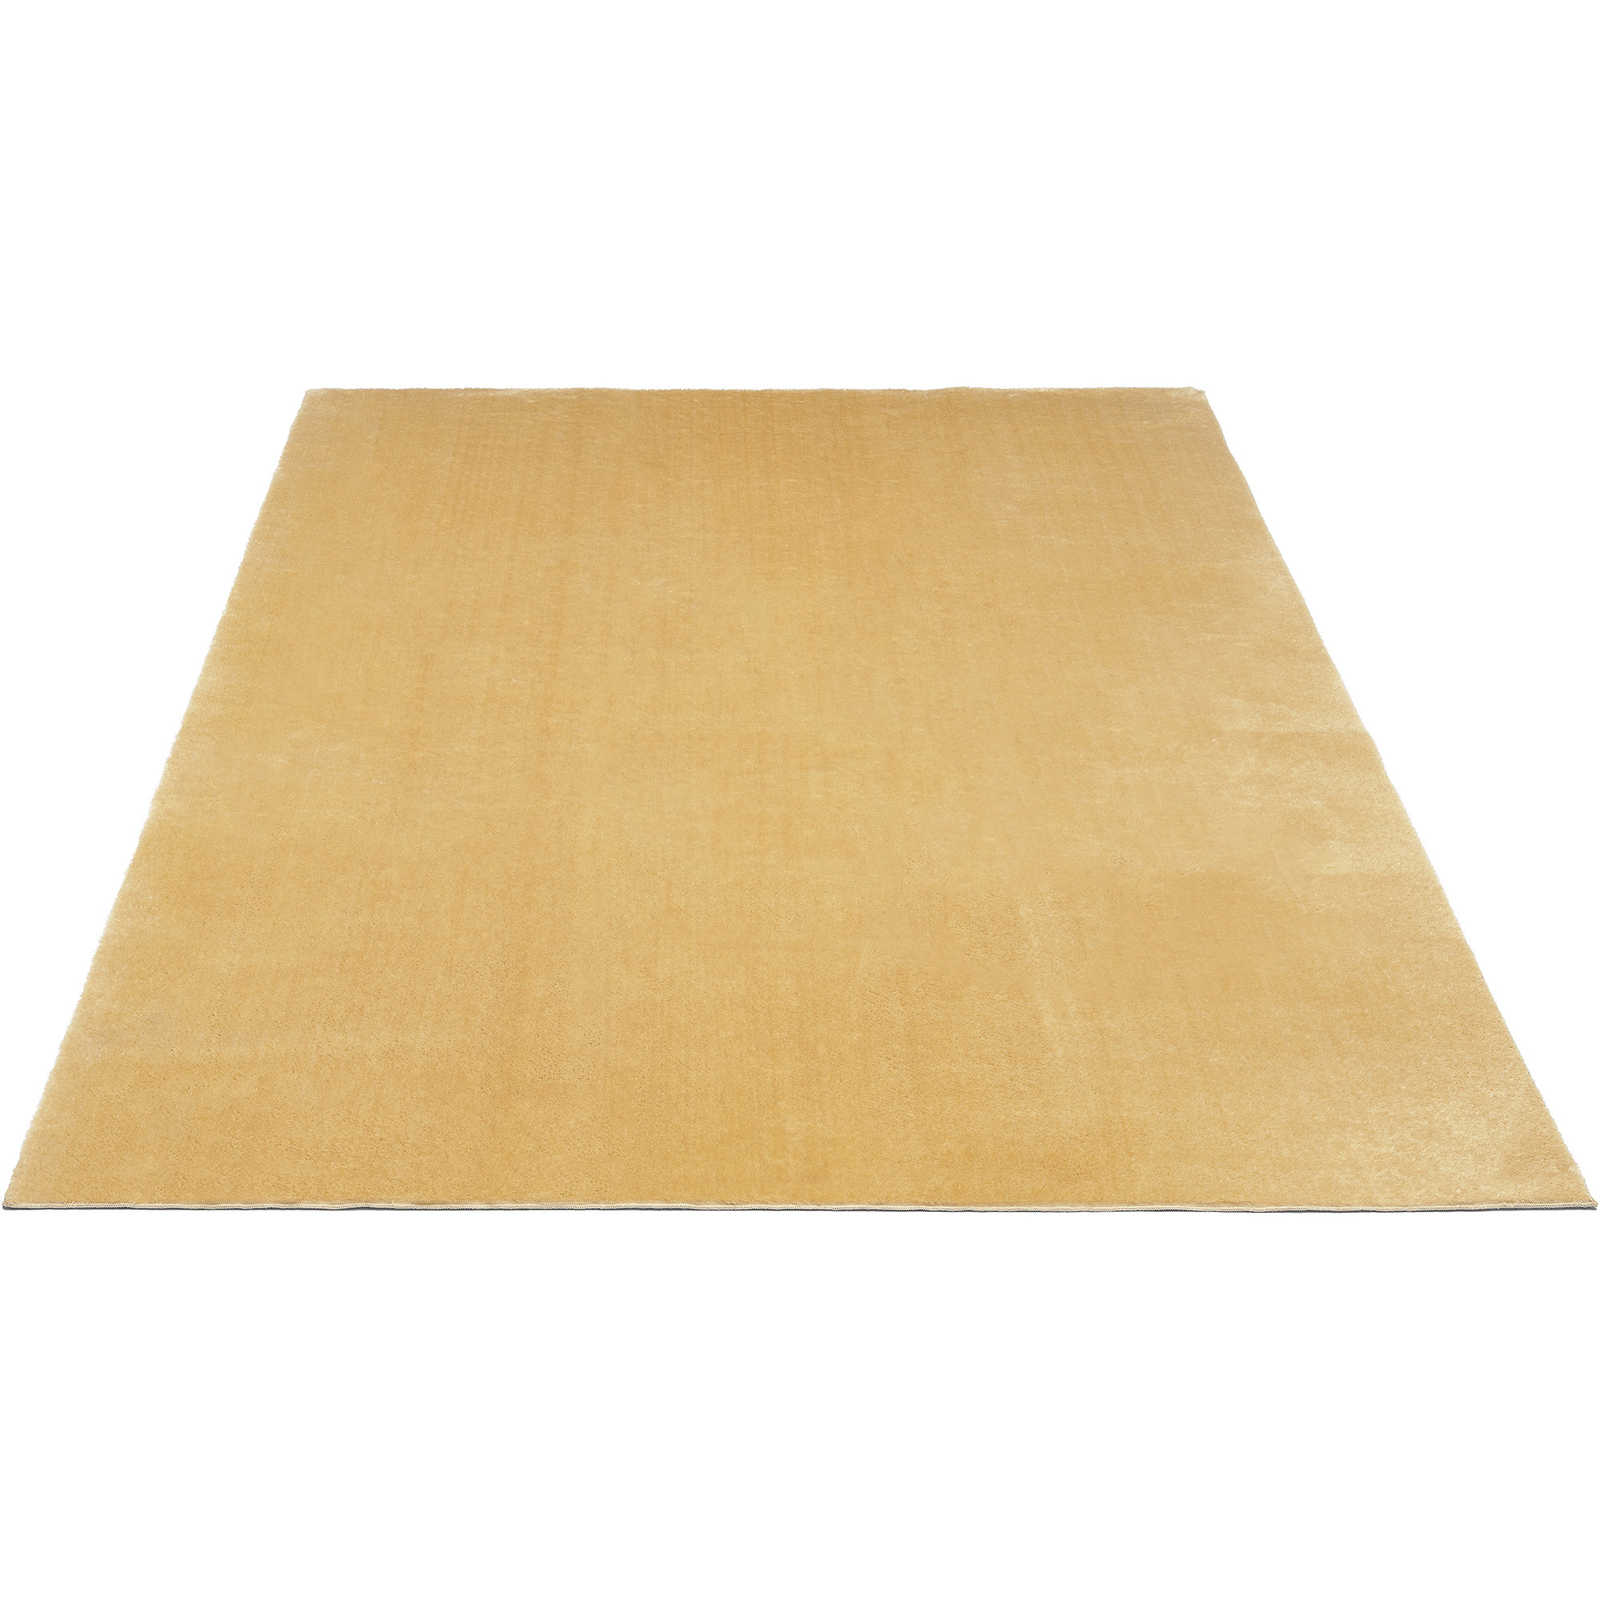 Knuffelzacht hoogpolig tapijt in goud - 340 x 240 cm
